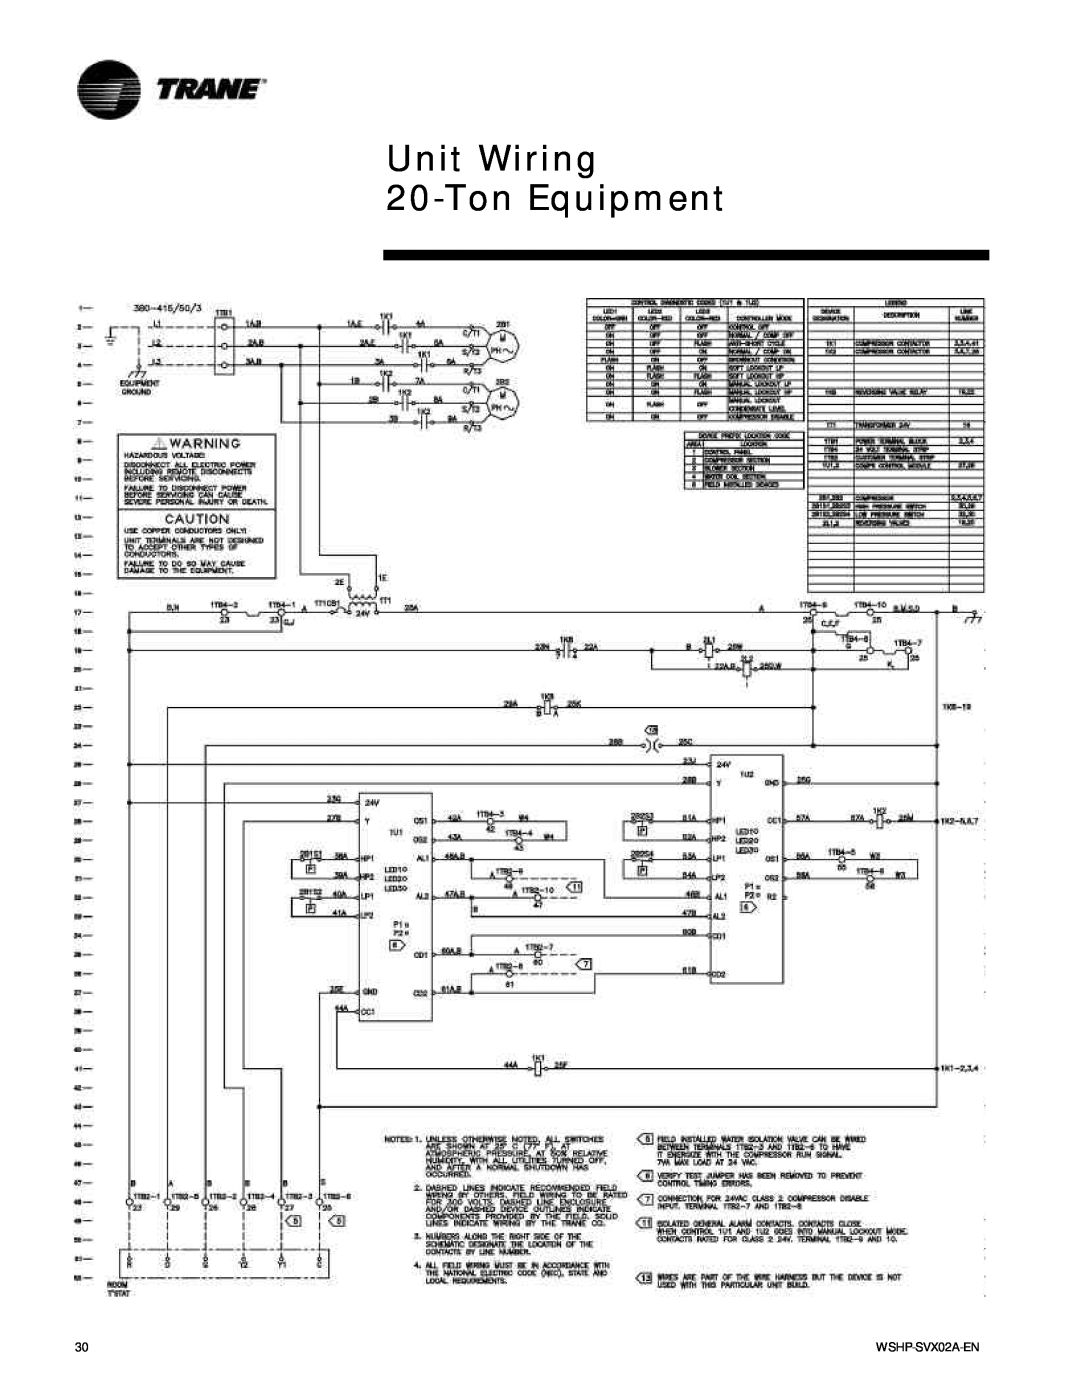 Trane EXWA, WPWD, GSWD manual Unit Wiring 20-TonEquipment, WSHP-SVX02A-EN 